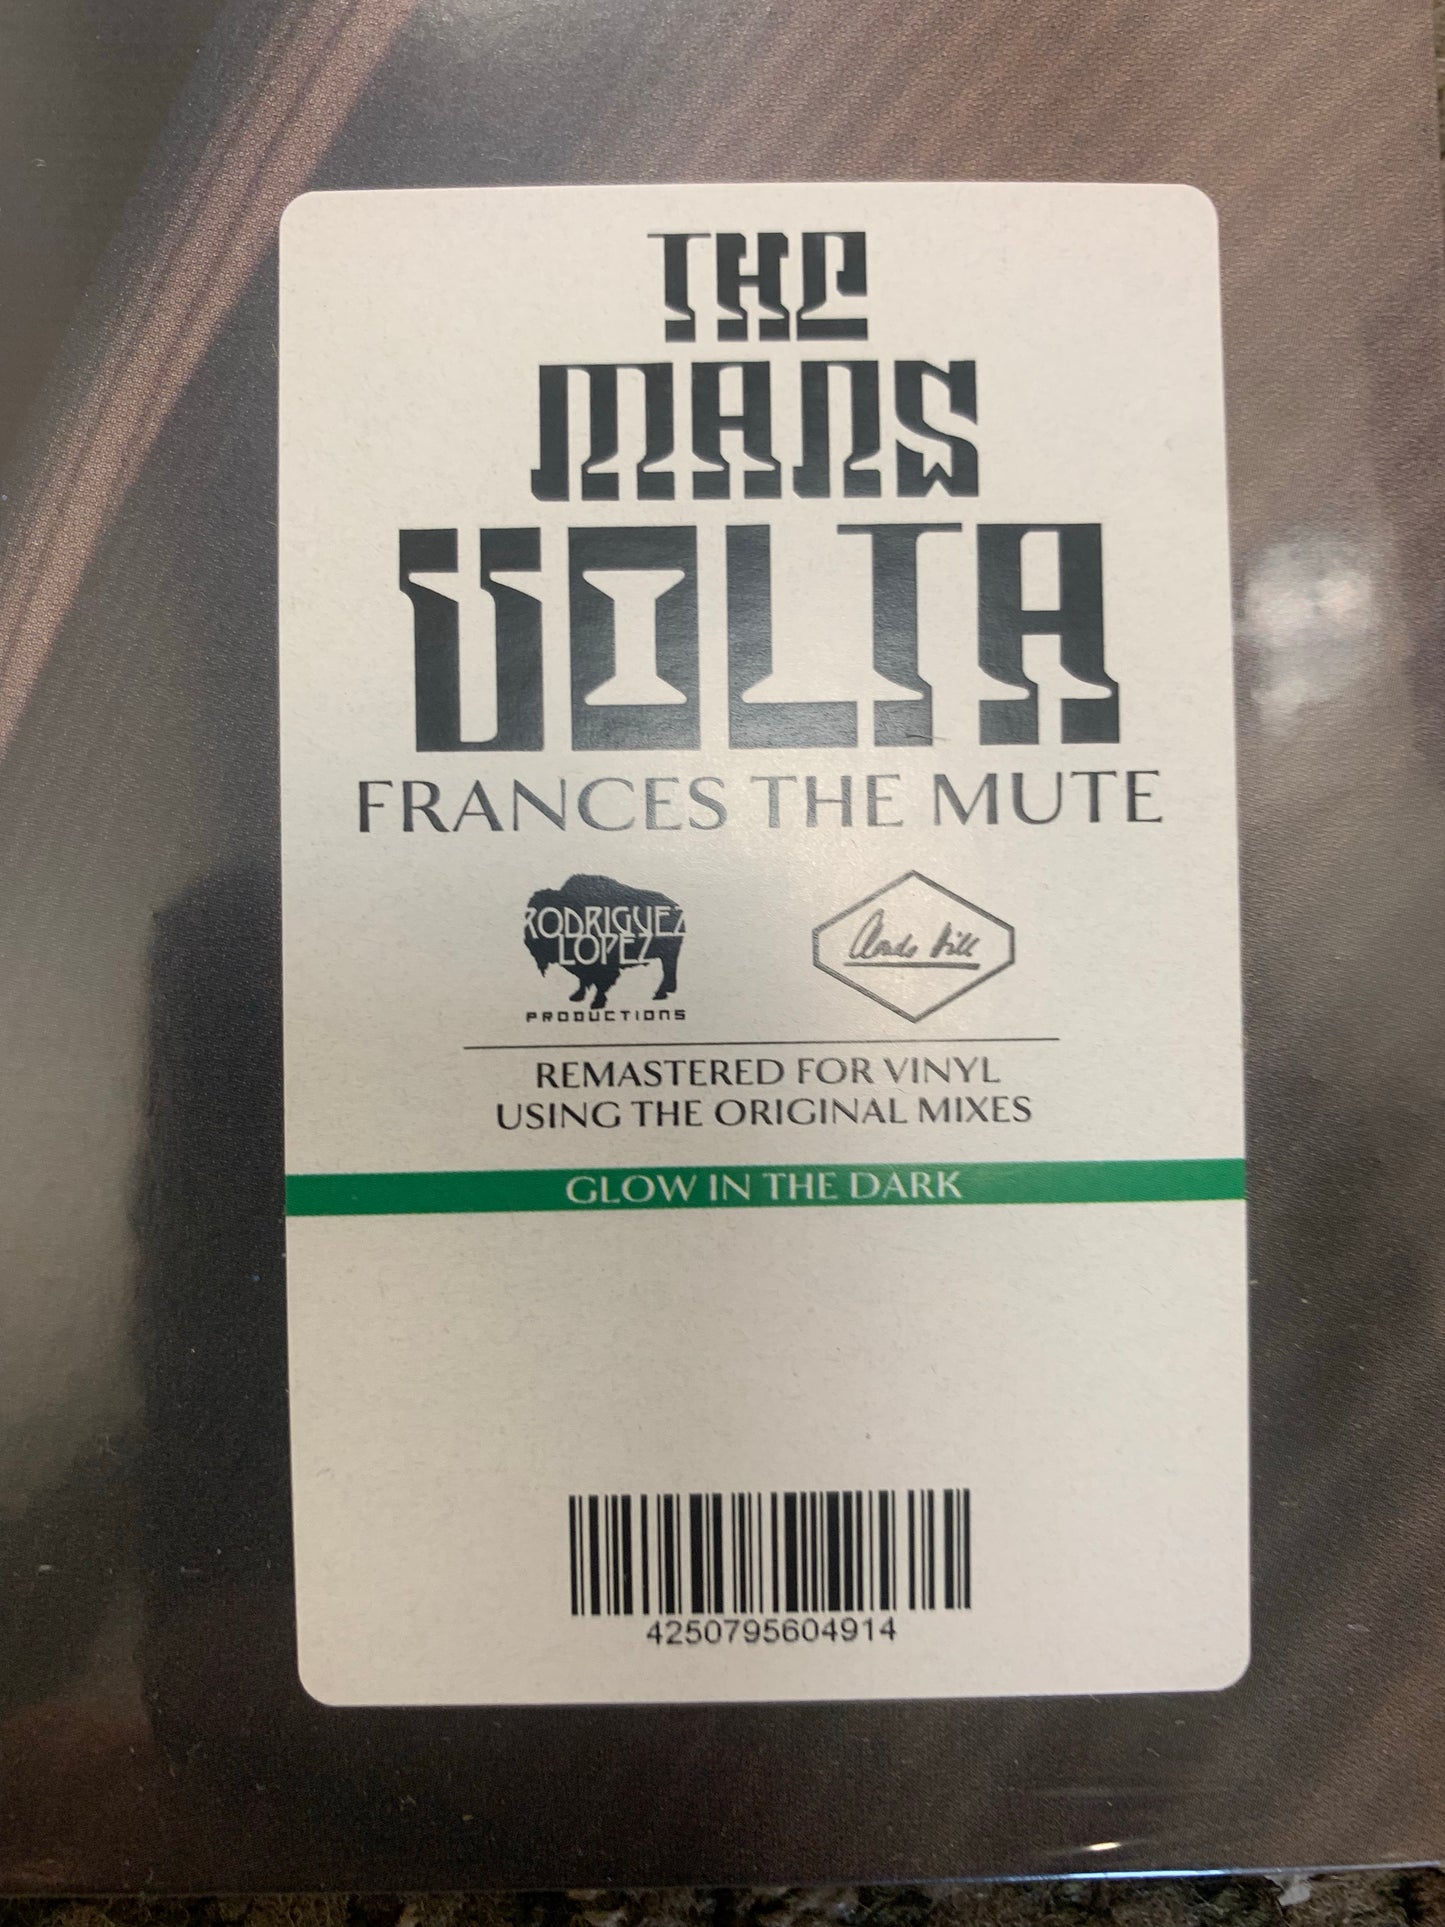 MARS VOLTA - FRANCES THE MUTE Vinyl LP